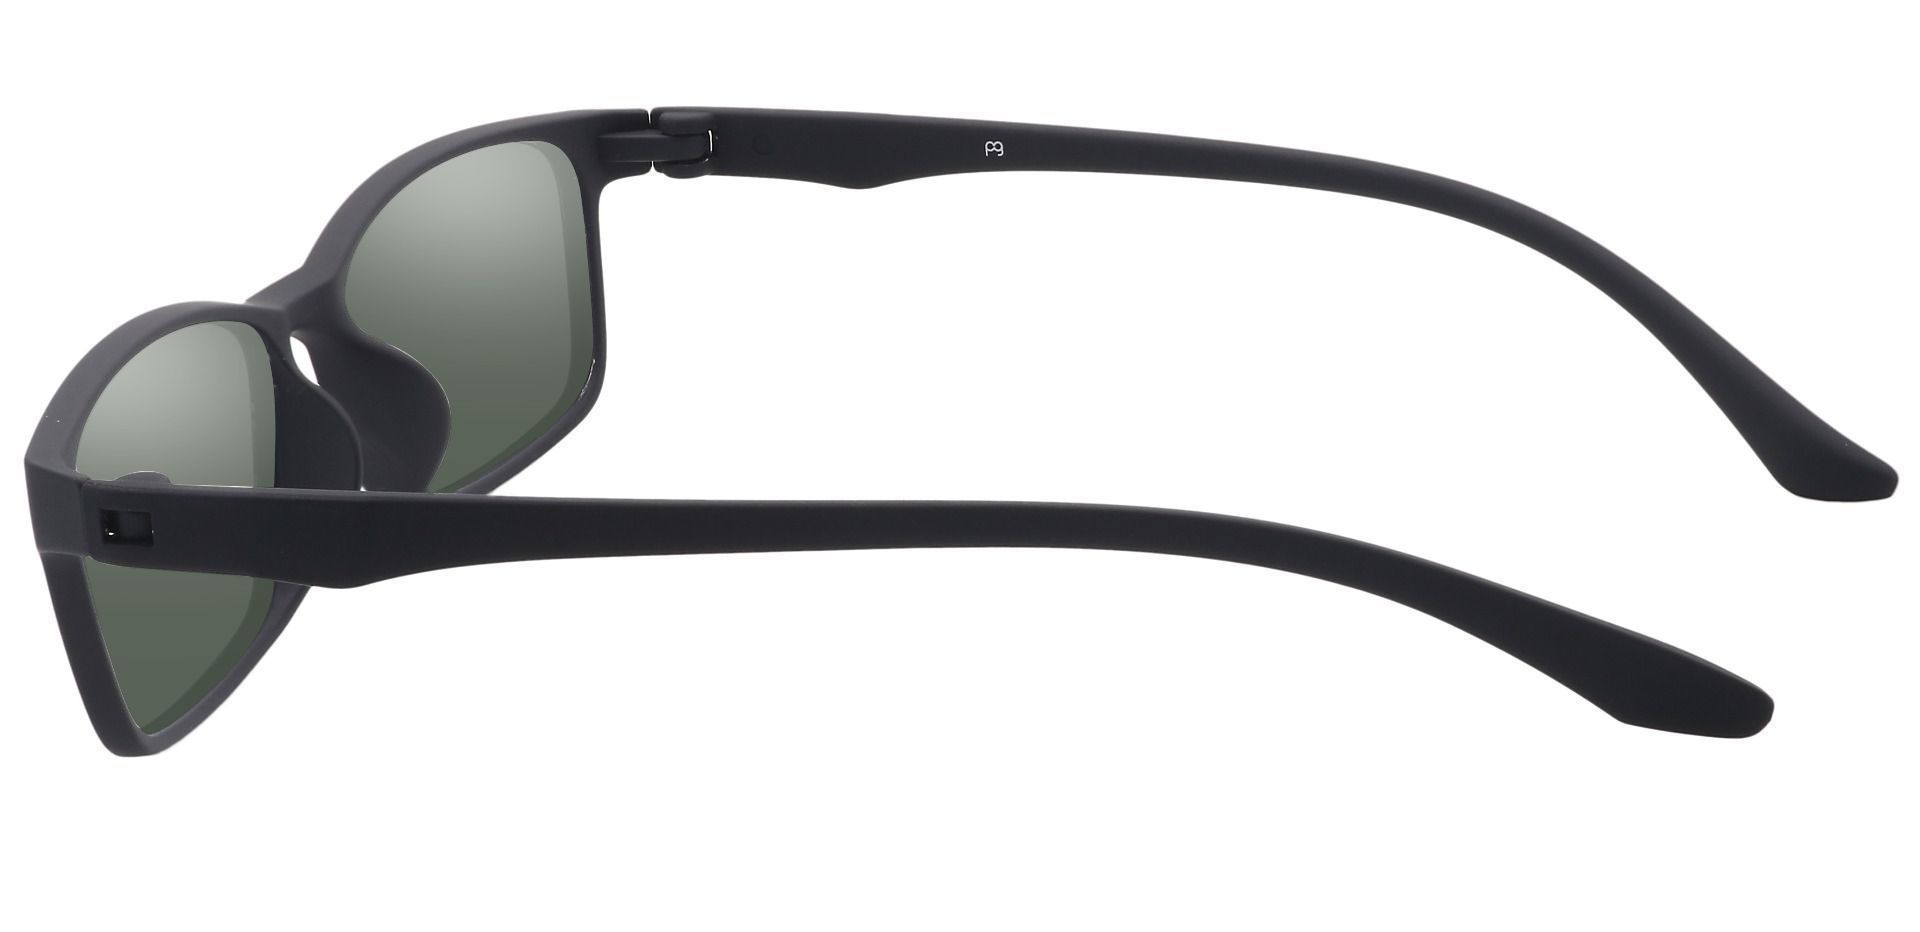 Wichita Rectangle Prescription Sunglasses - Black Frame With Green Lenses